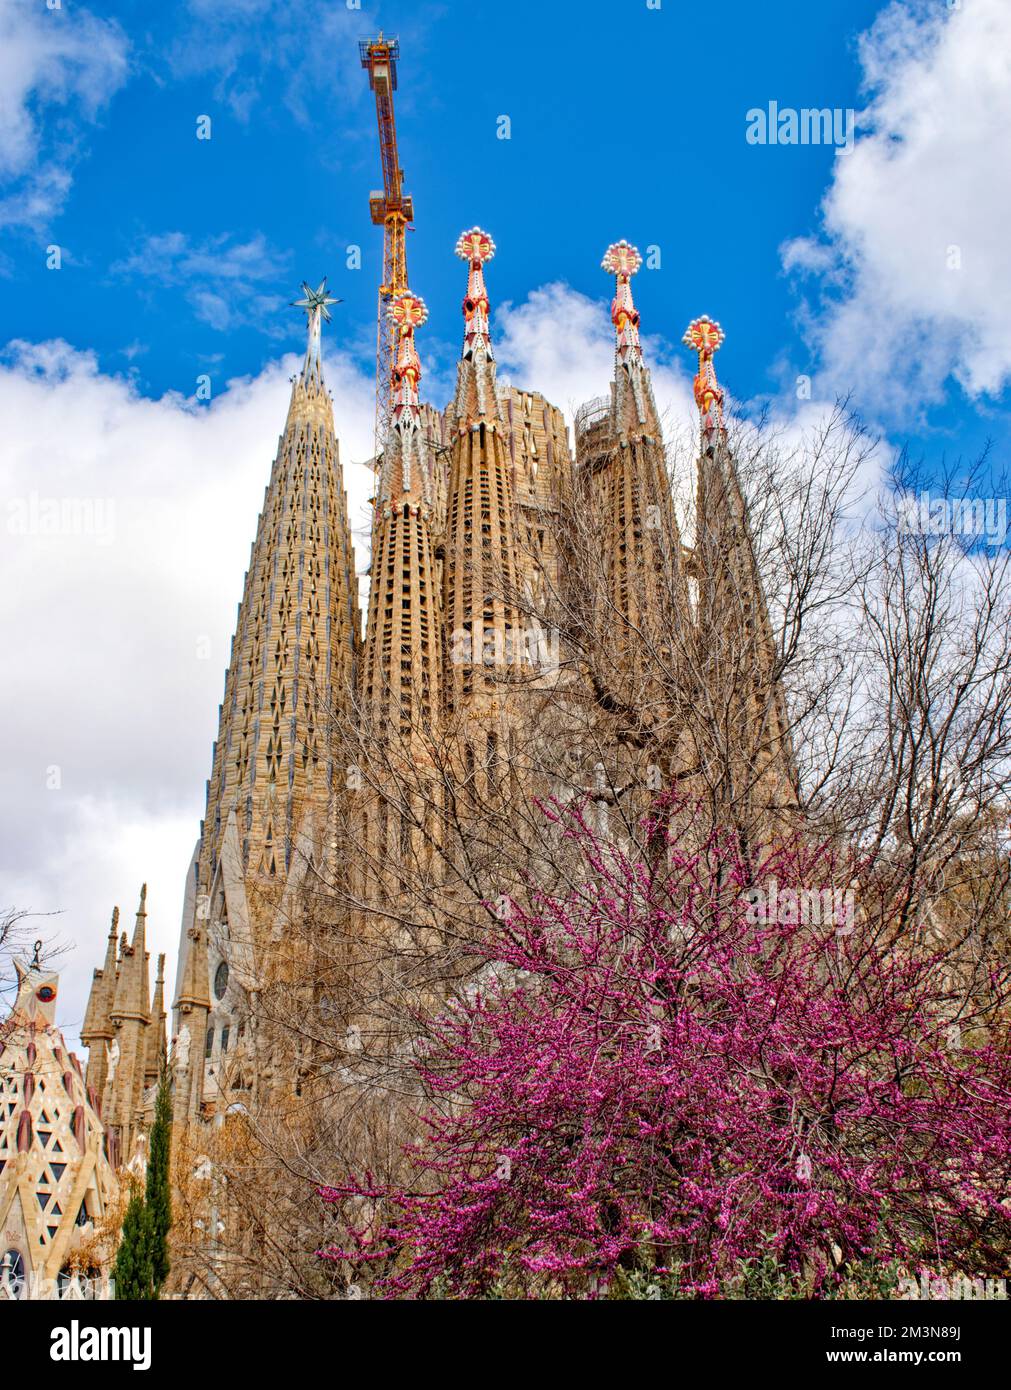 Basílica i Tempel Expiatori de la Sagrada Família und ein großer gelber Kran während des Baus der bunten Türme Stockfoto